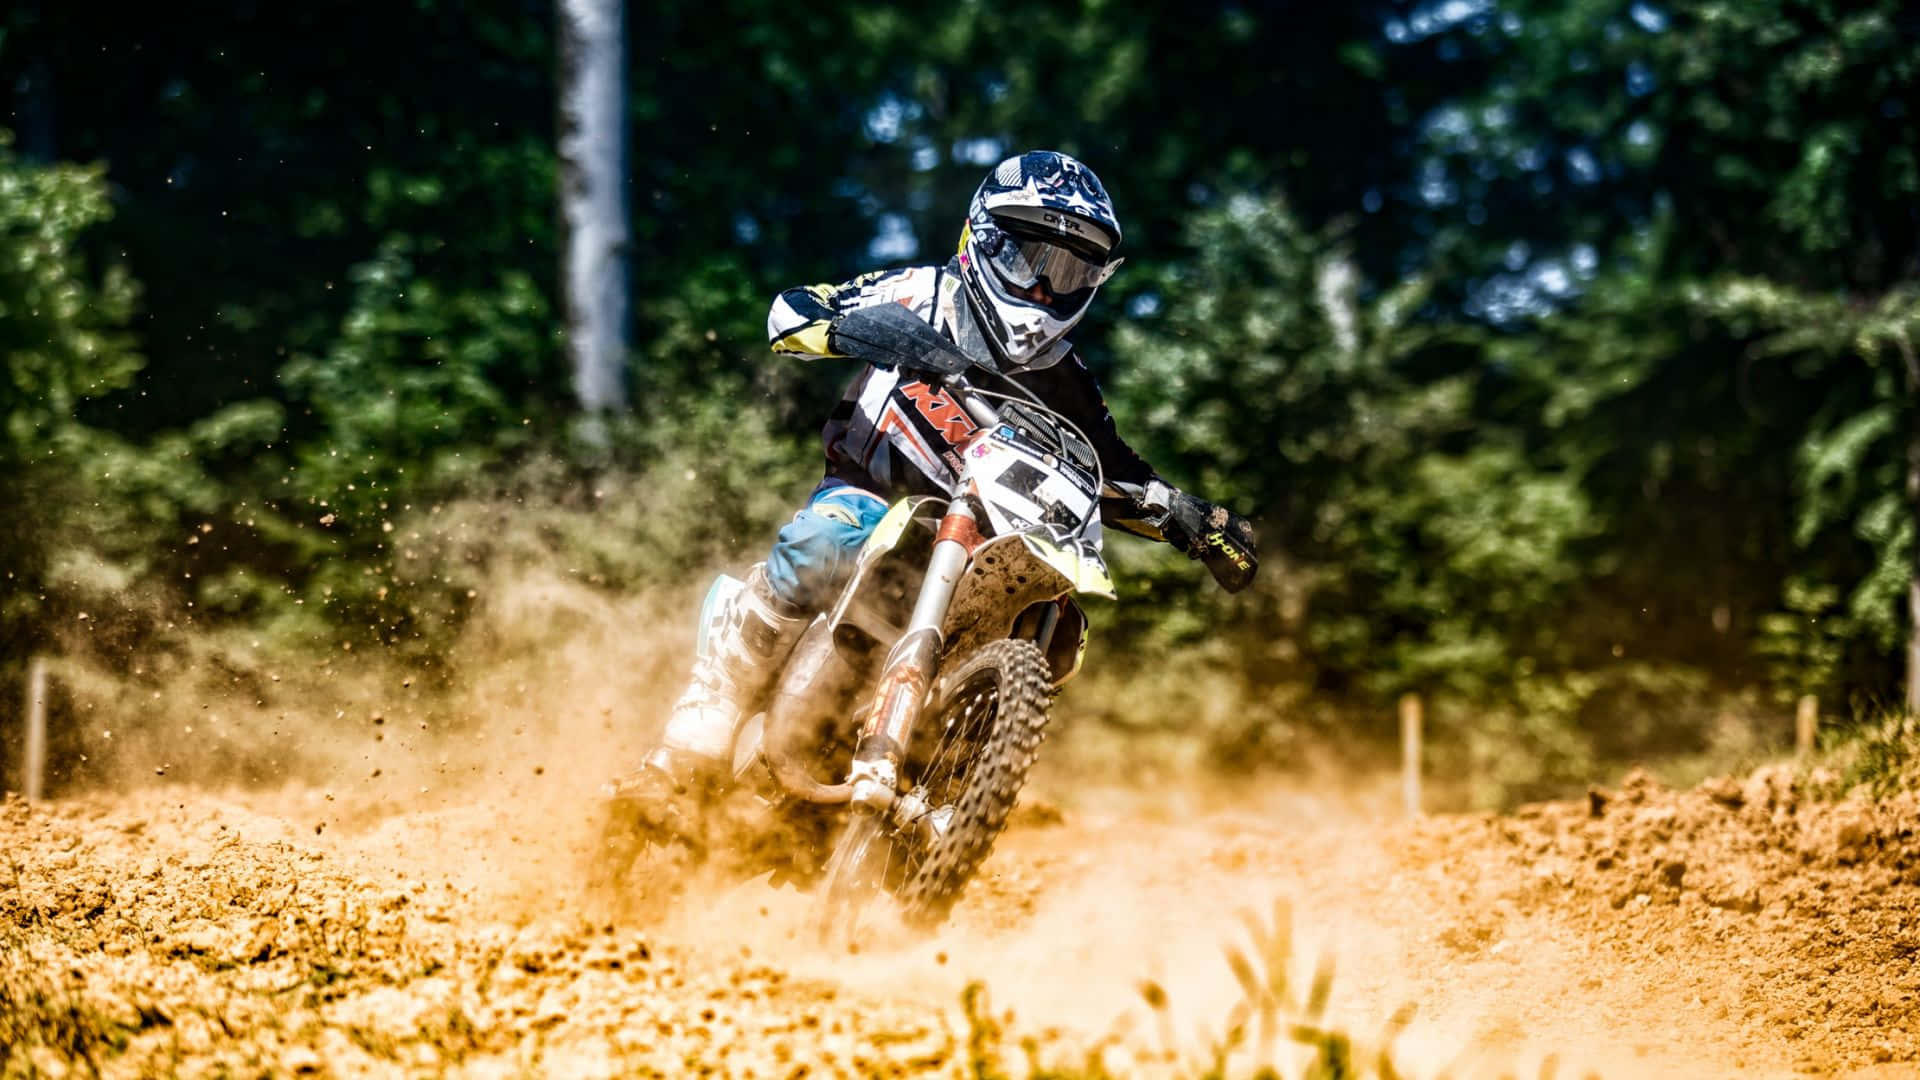 Motocross Rider Catching Air on a Dirt Bike